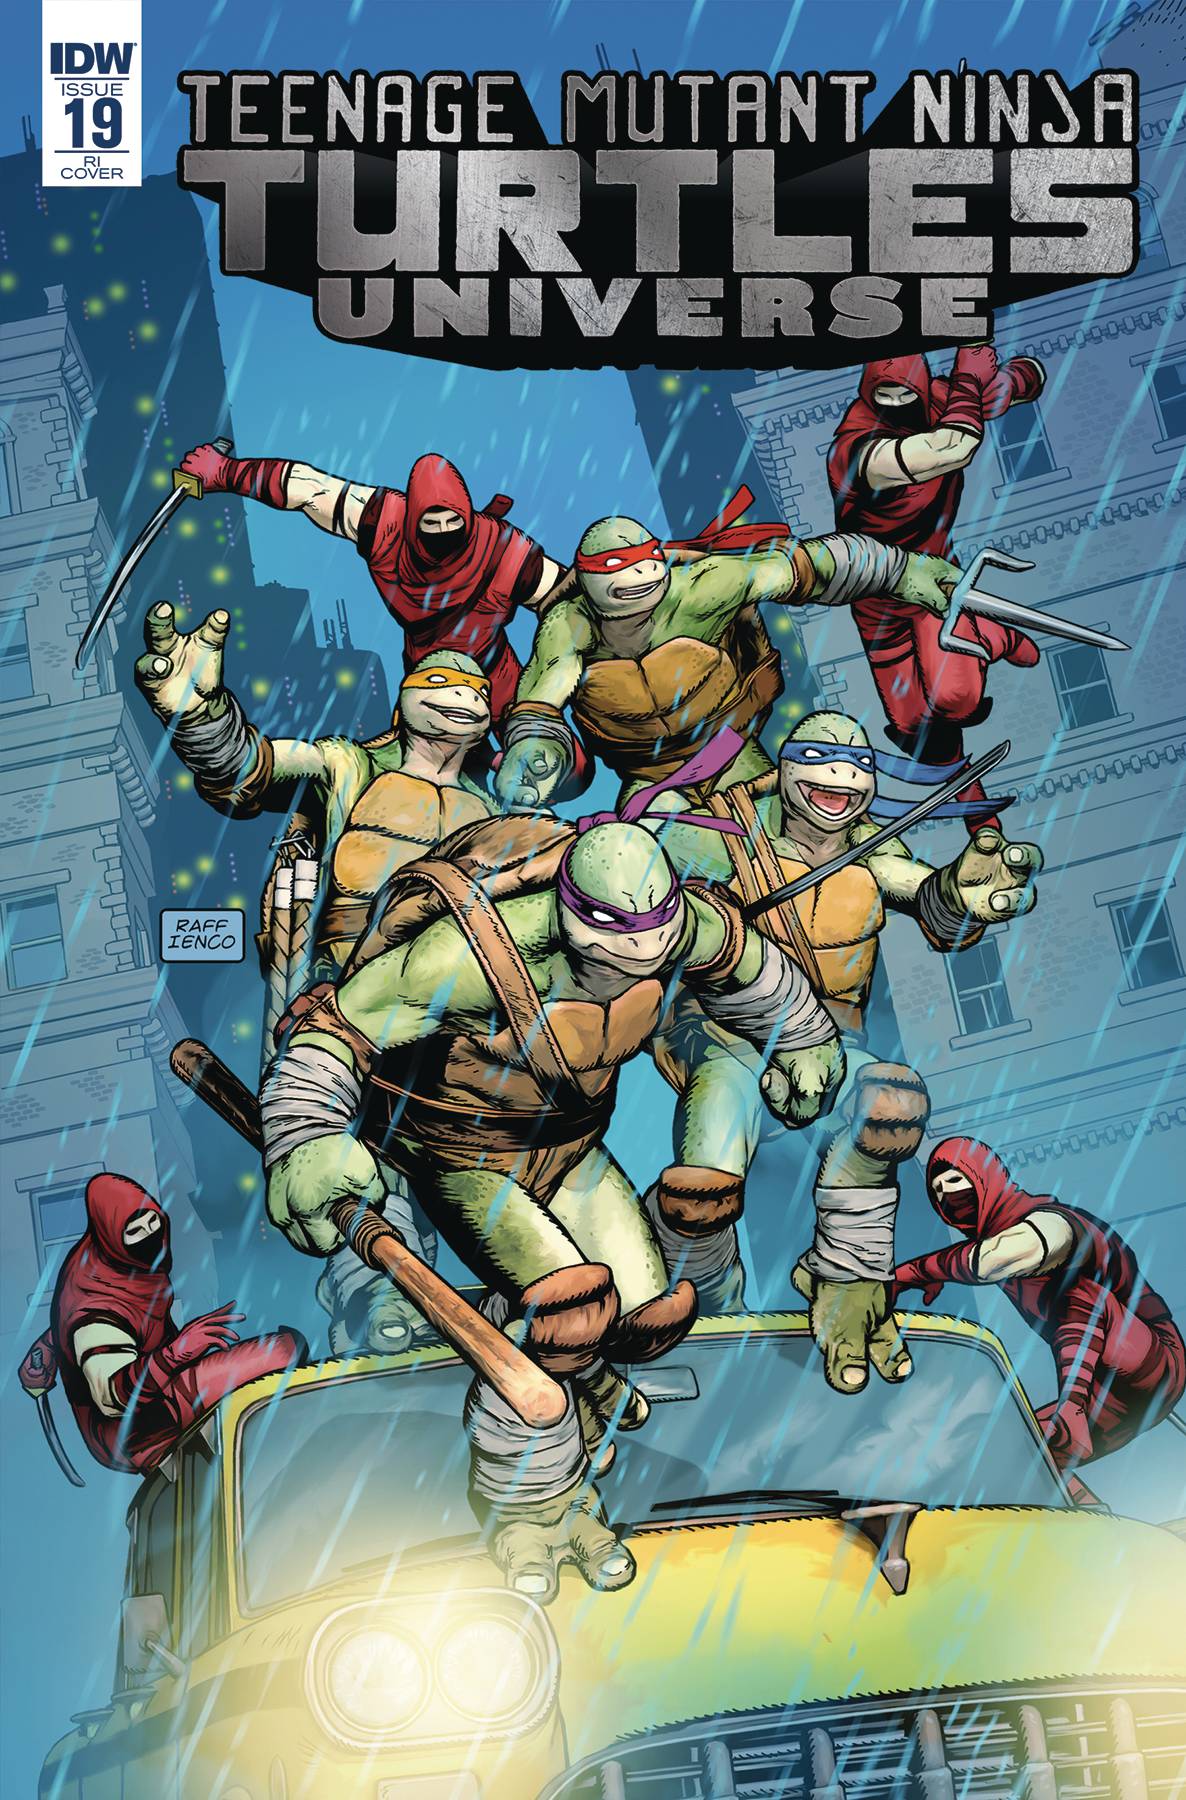 Teenage Mutant Ninja Turtles Universe #19 1 for 10 Incentive